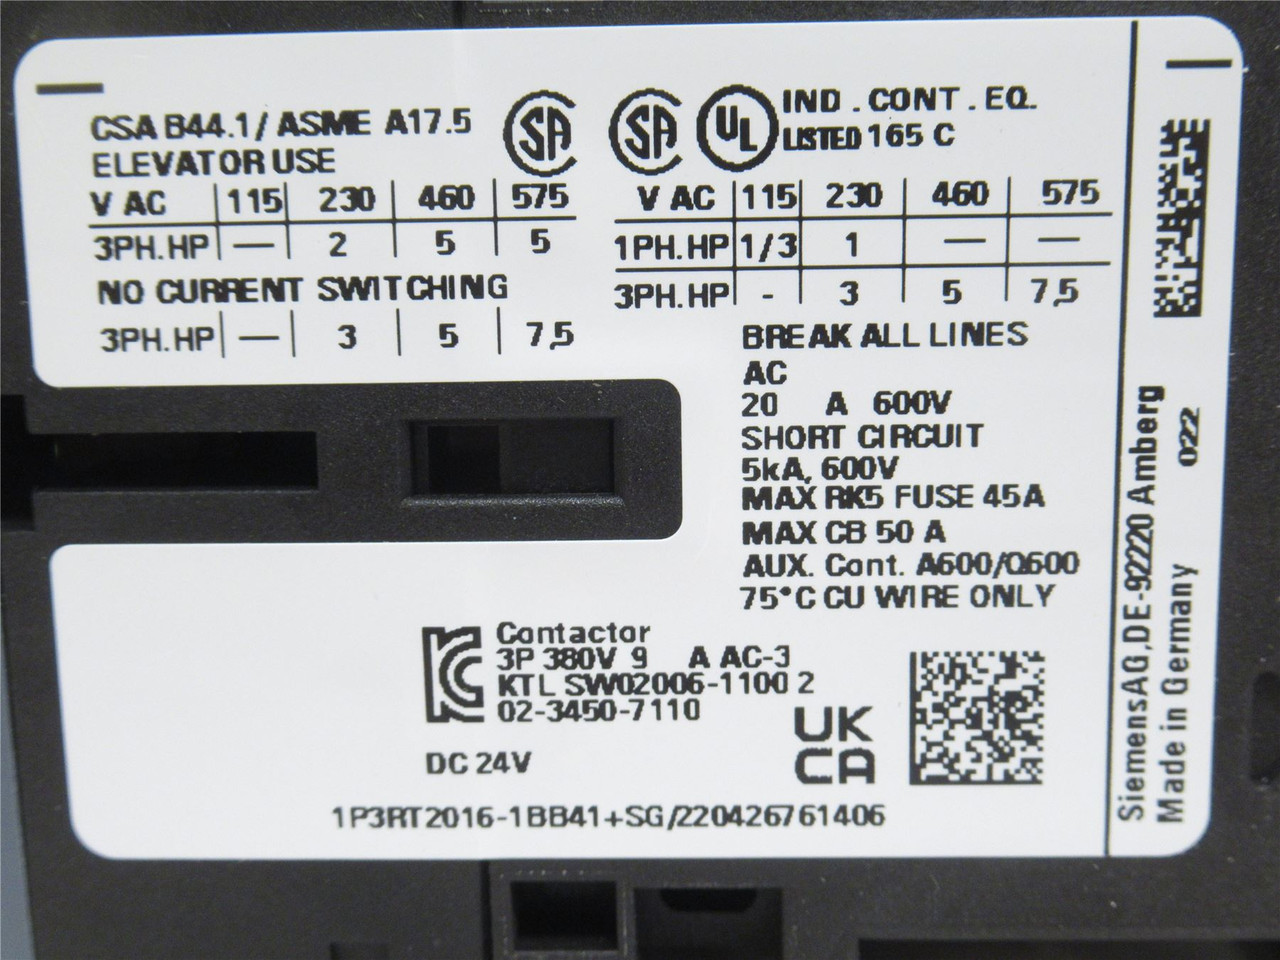 Siemens 3RT2016-1BB41; Contactor; 9A; 3P; 400VAC; Coil: 24VDC